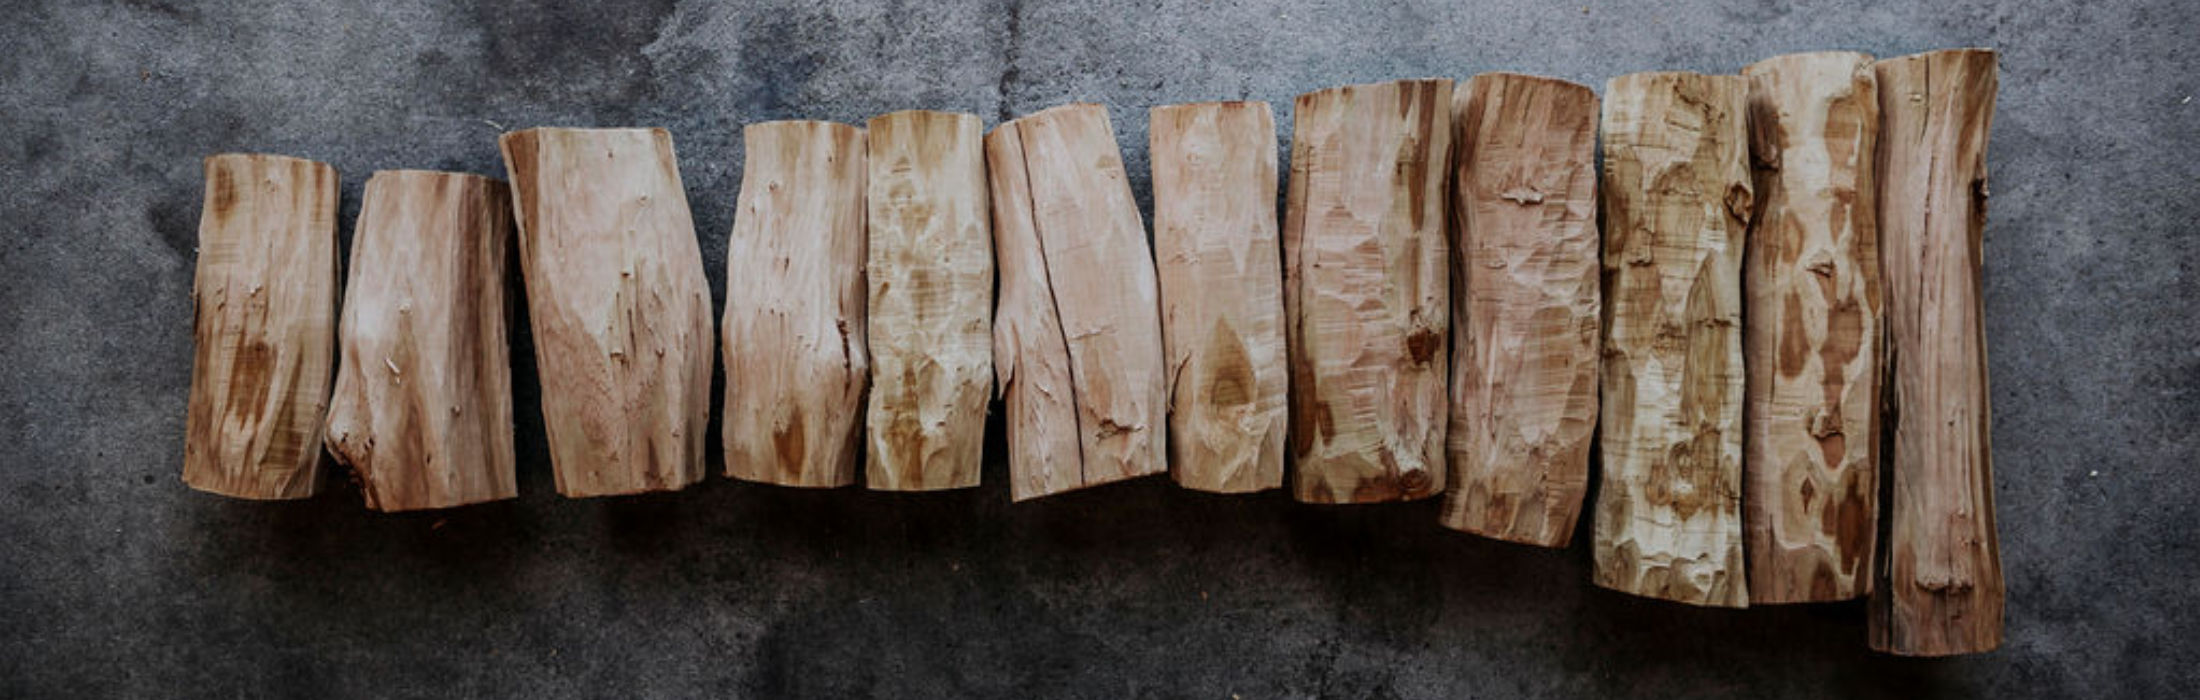 Sandalwood logs lined up